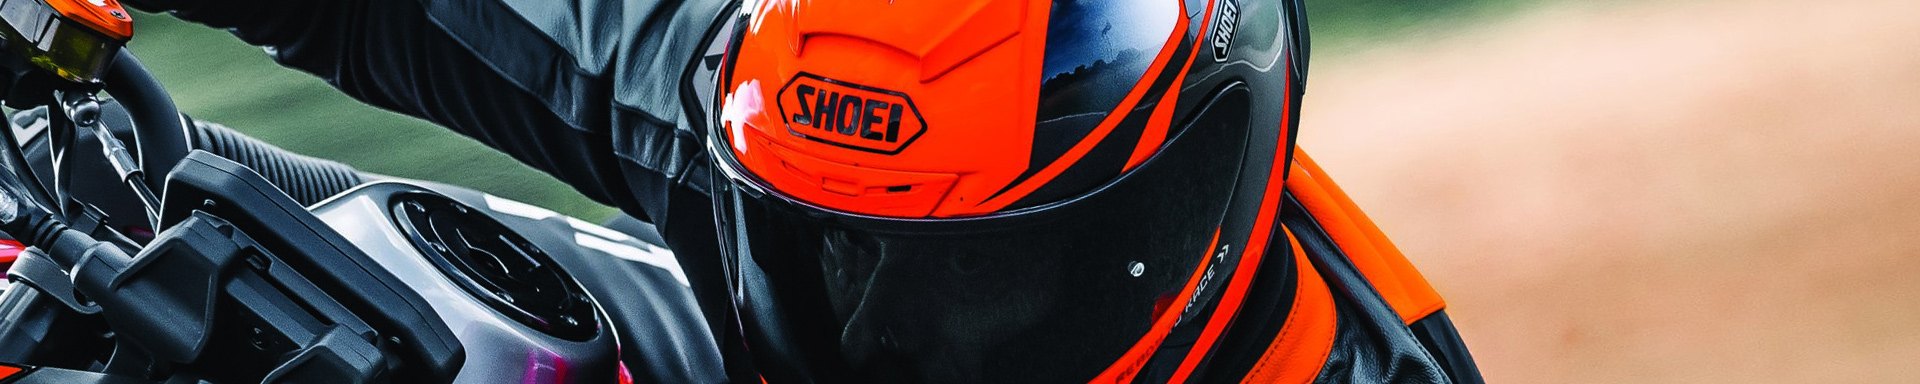 Simpson Motorcycle Full Face Helmets